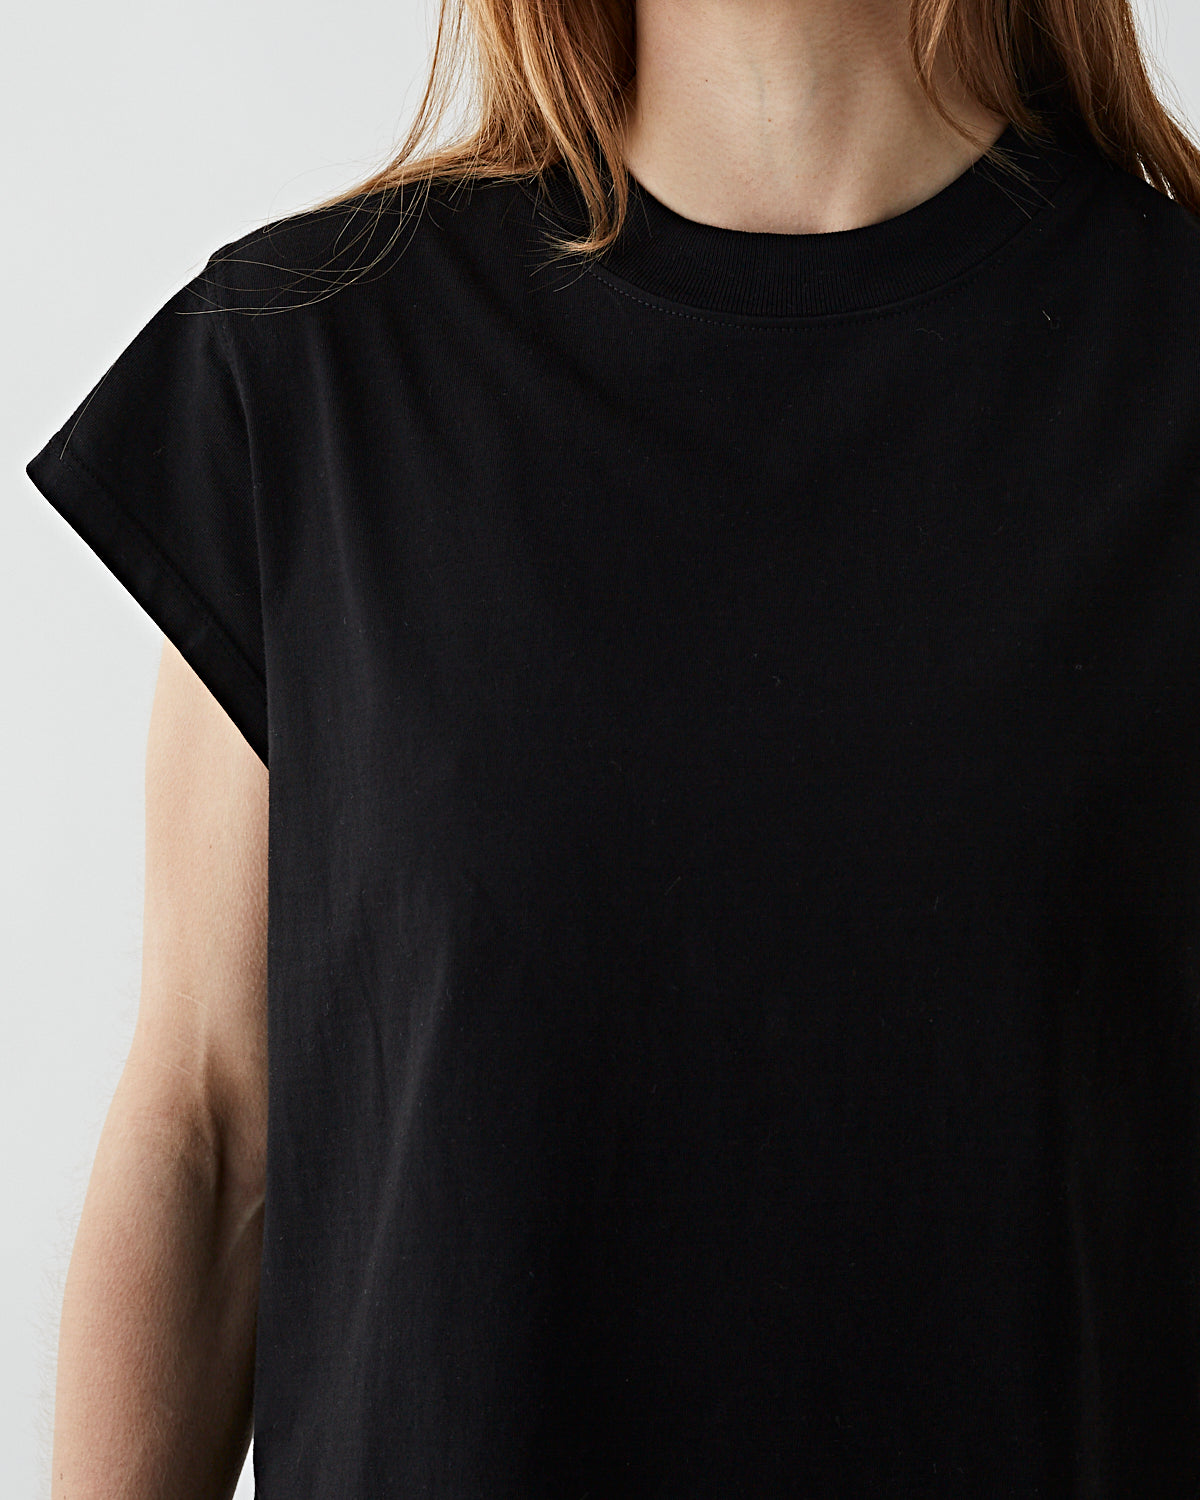 AgoldE Bryce Cap Sleeve Tee Black T-shirt S/S Women